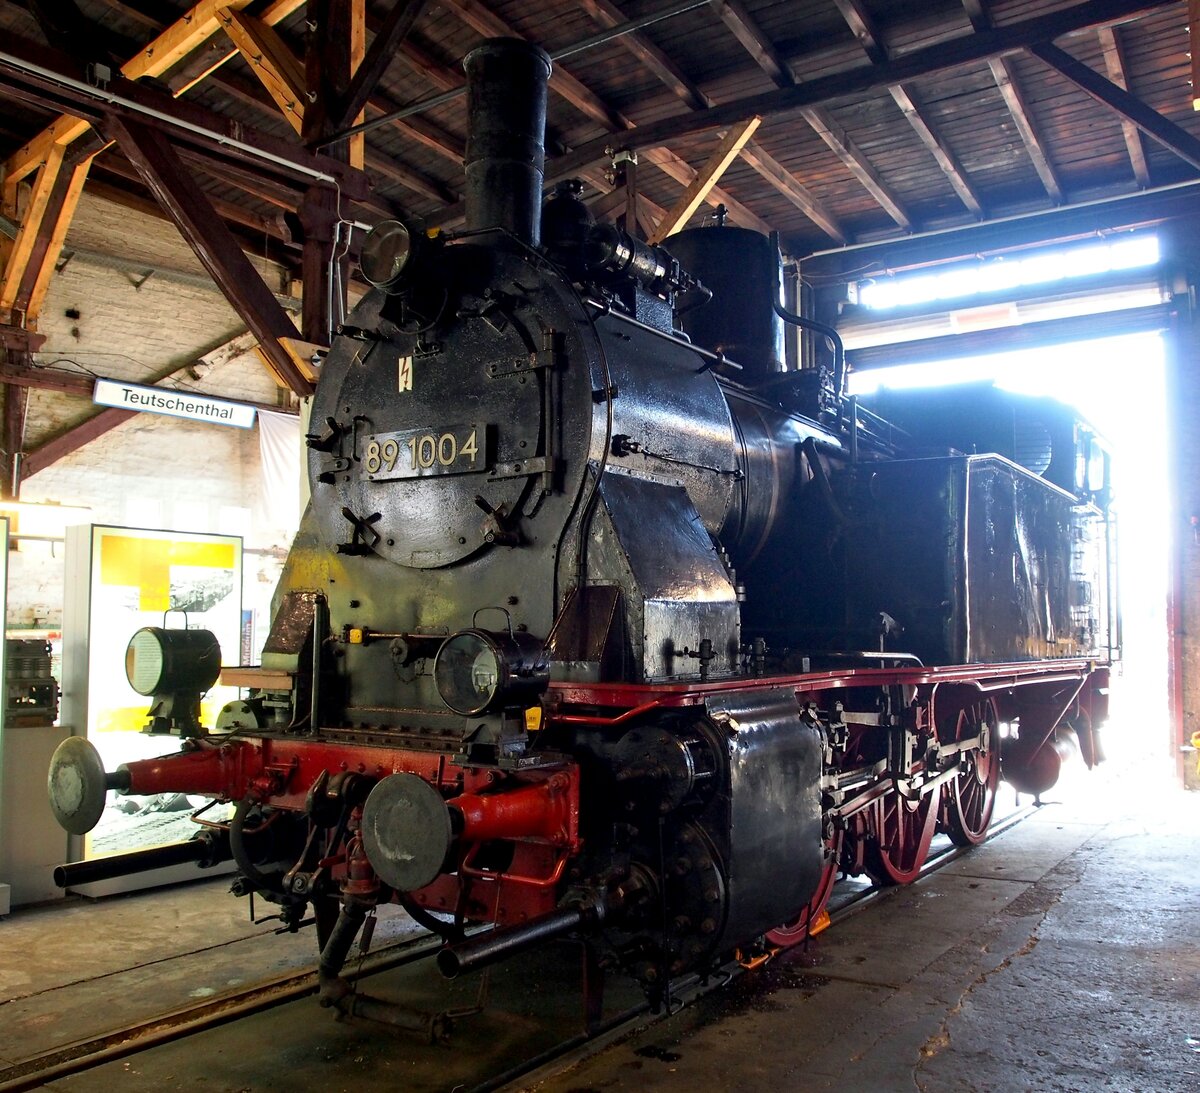 89 1004 im Eisenbahnmuseum Halle am 20.07.2019.